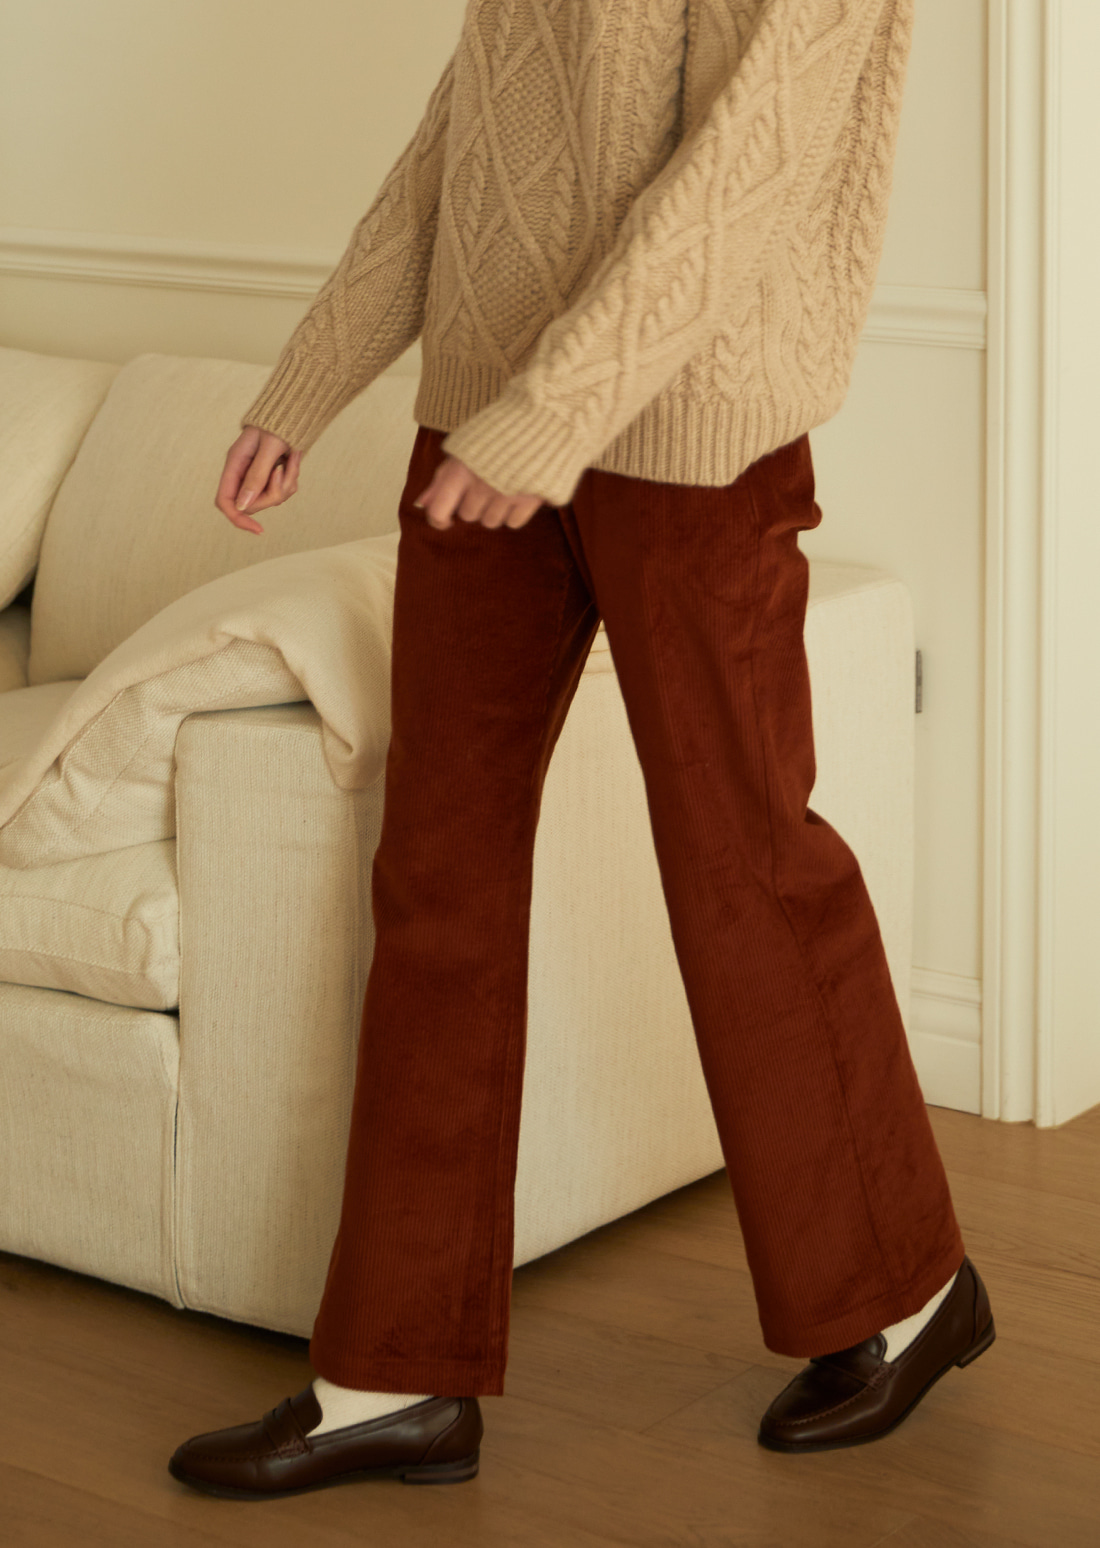 Retro Corduroy Pants (Orange Brown)